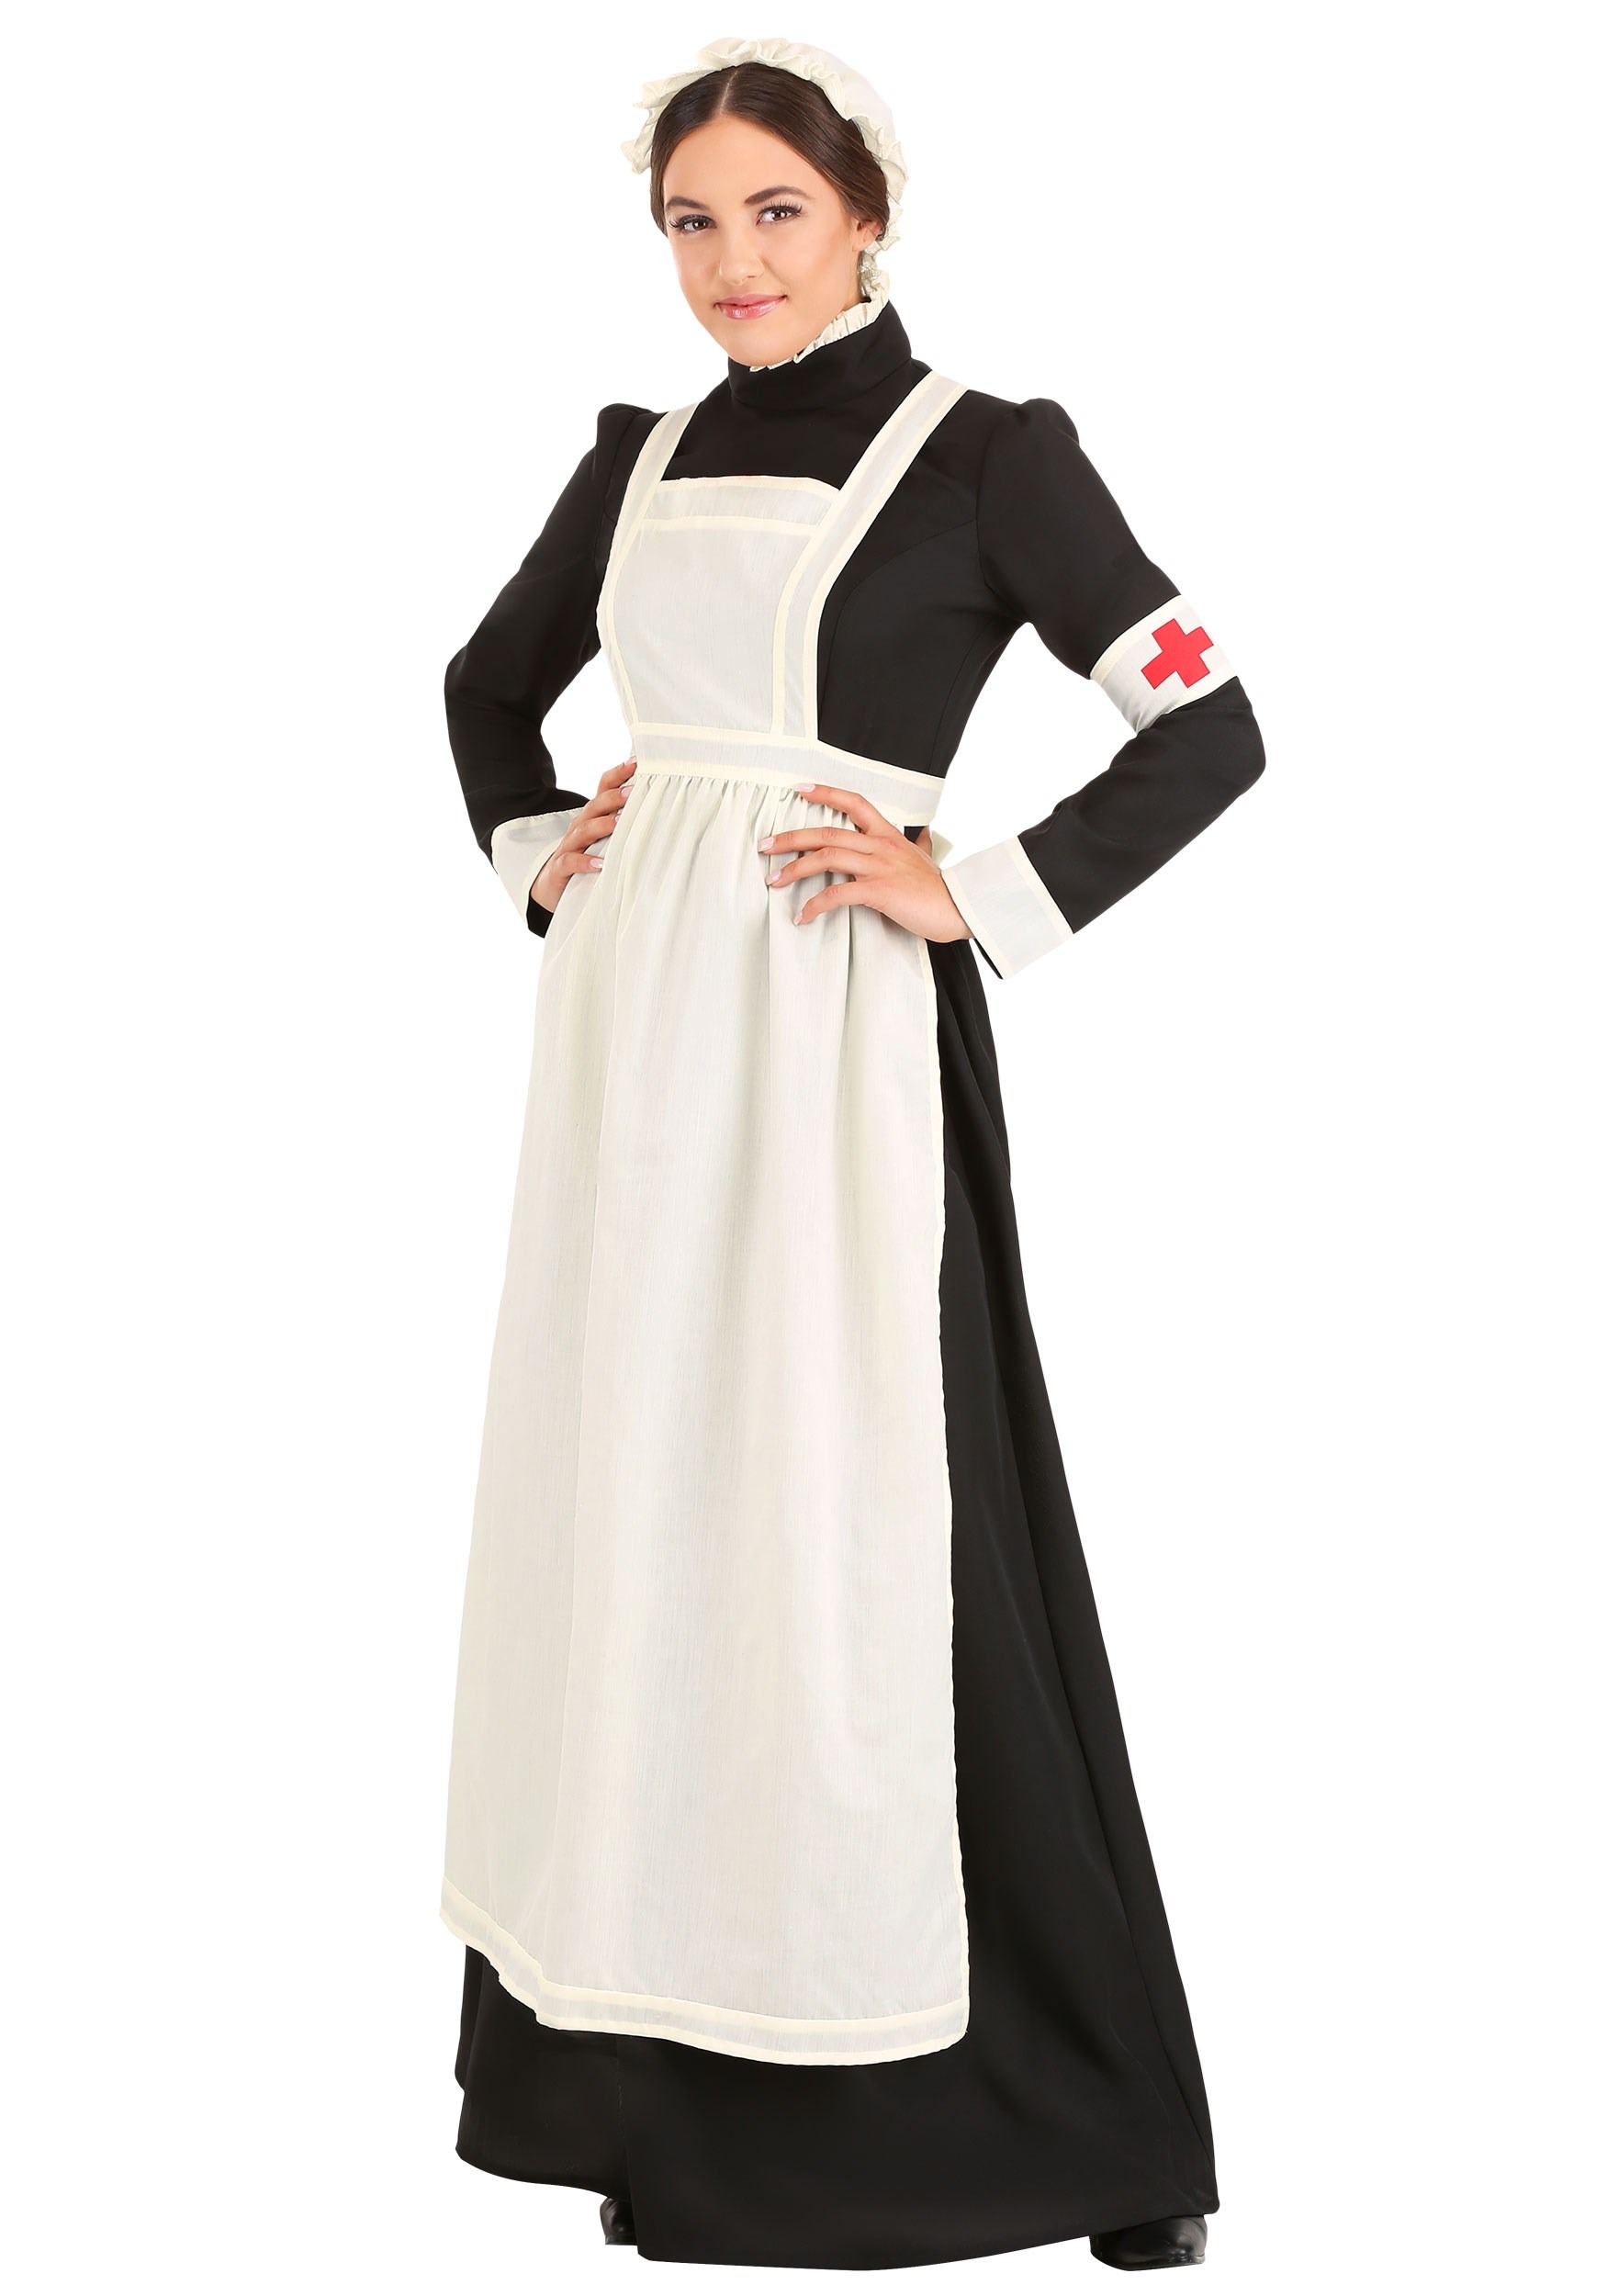 Florence Nightingale Women's Costume